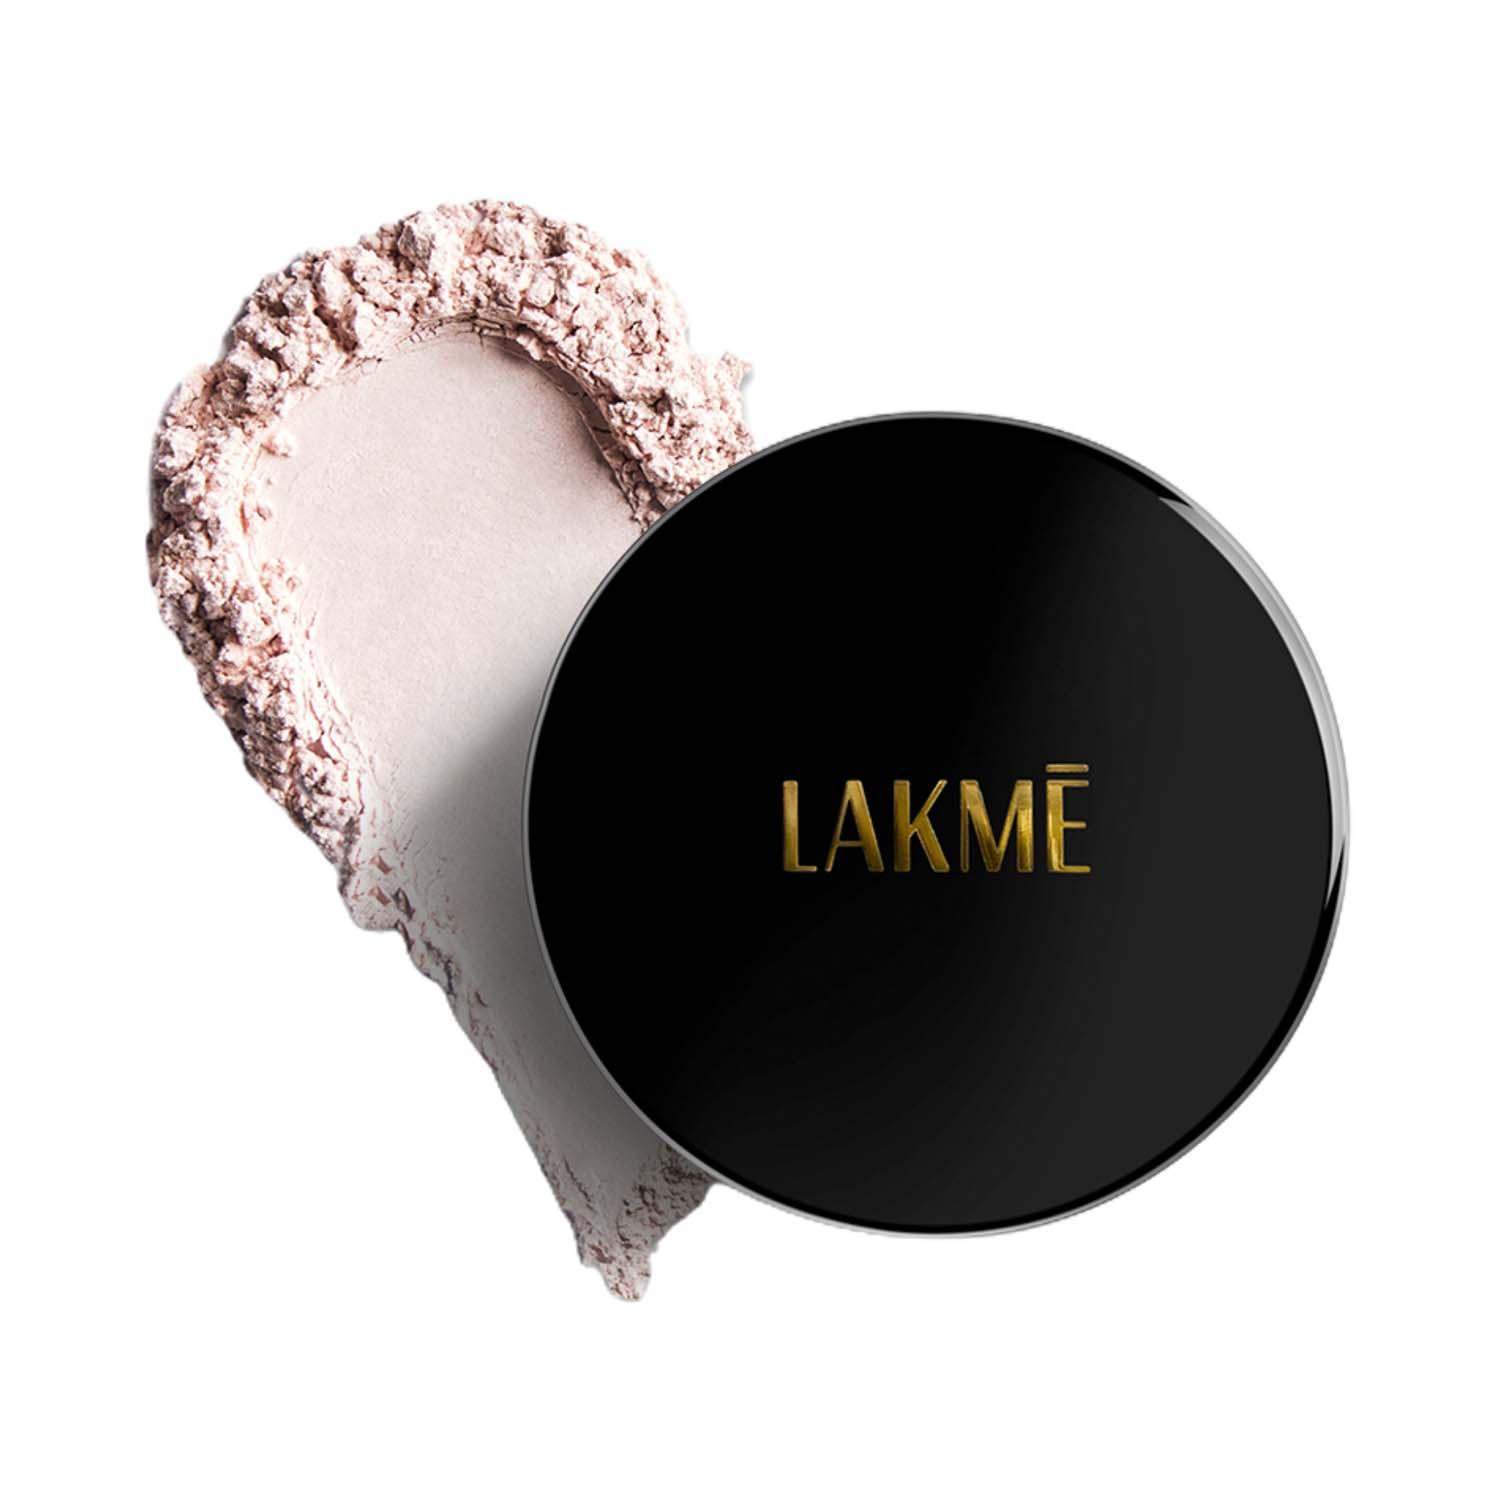 Lakme | Lakme Face It Loose Finishing Setting Powder - Beige (15g)